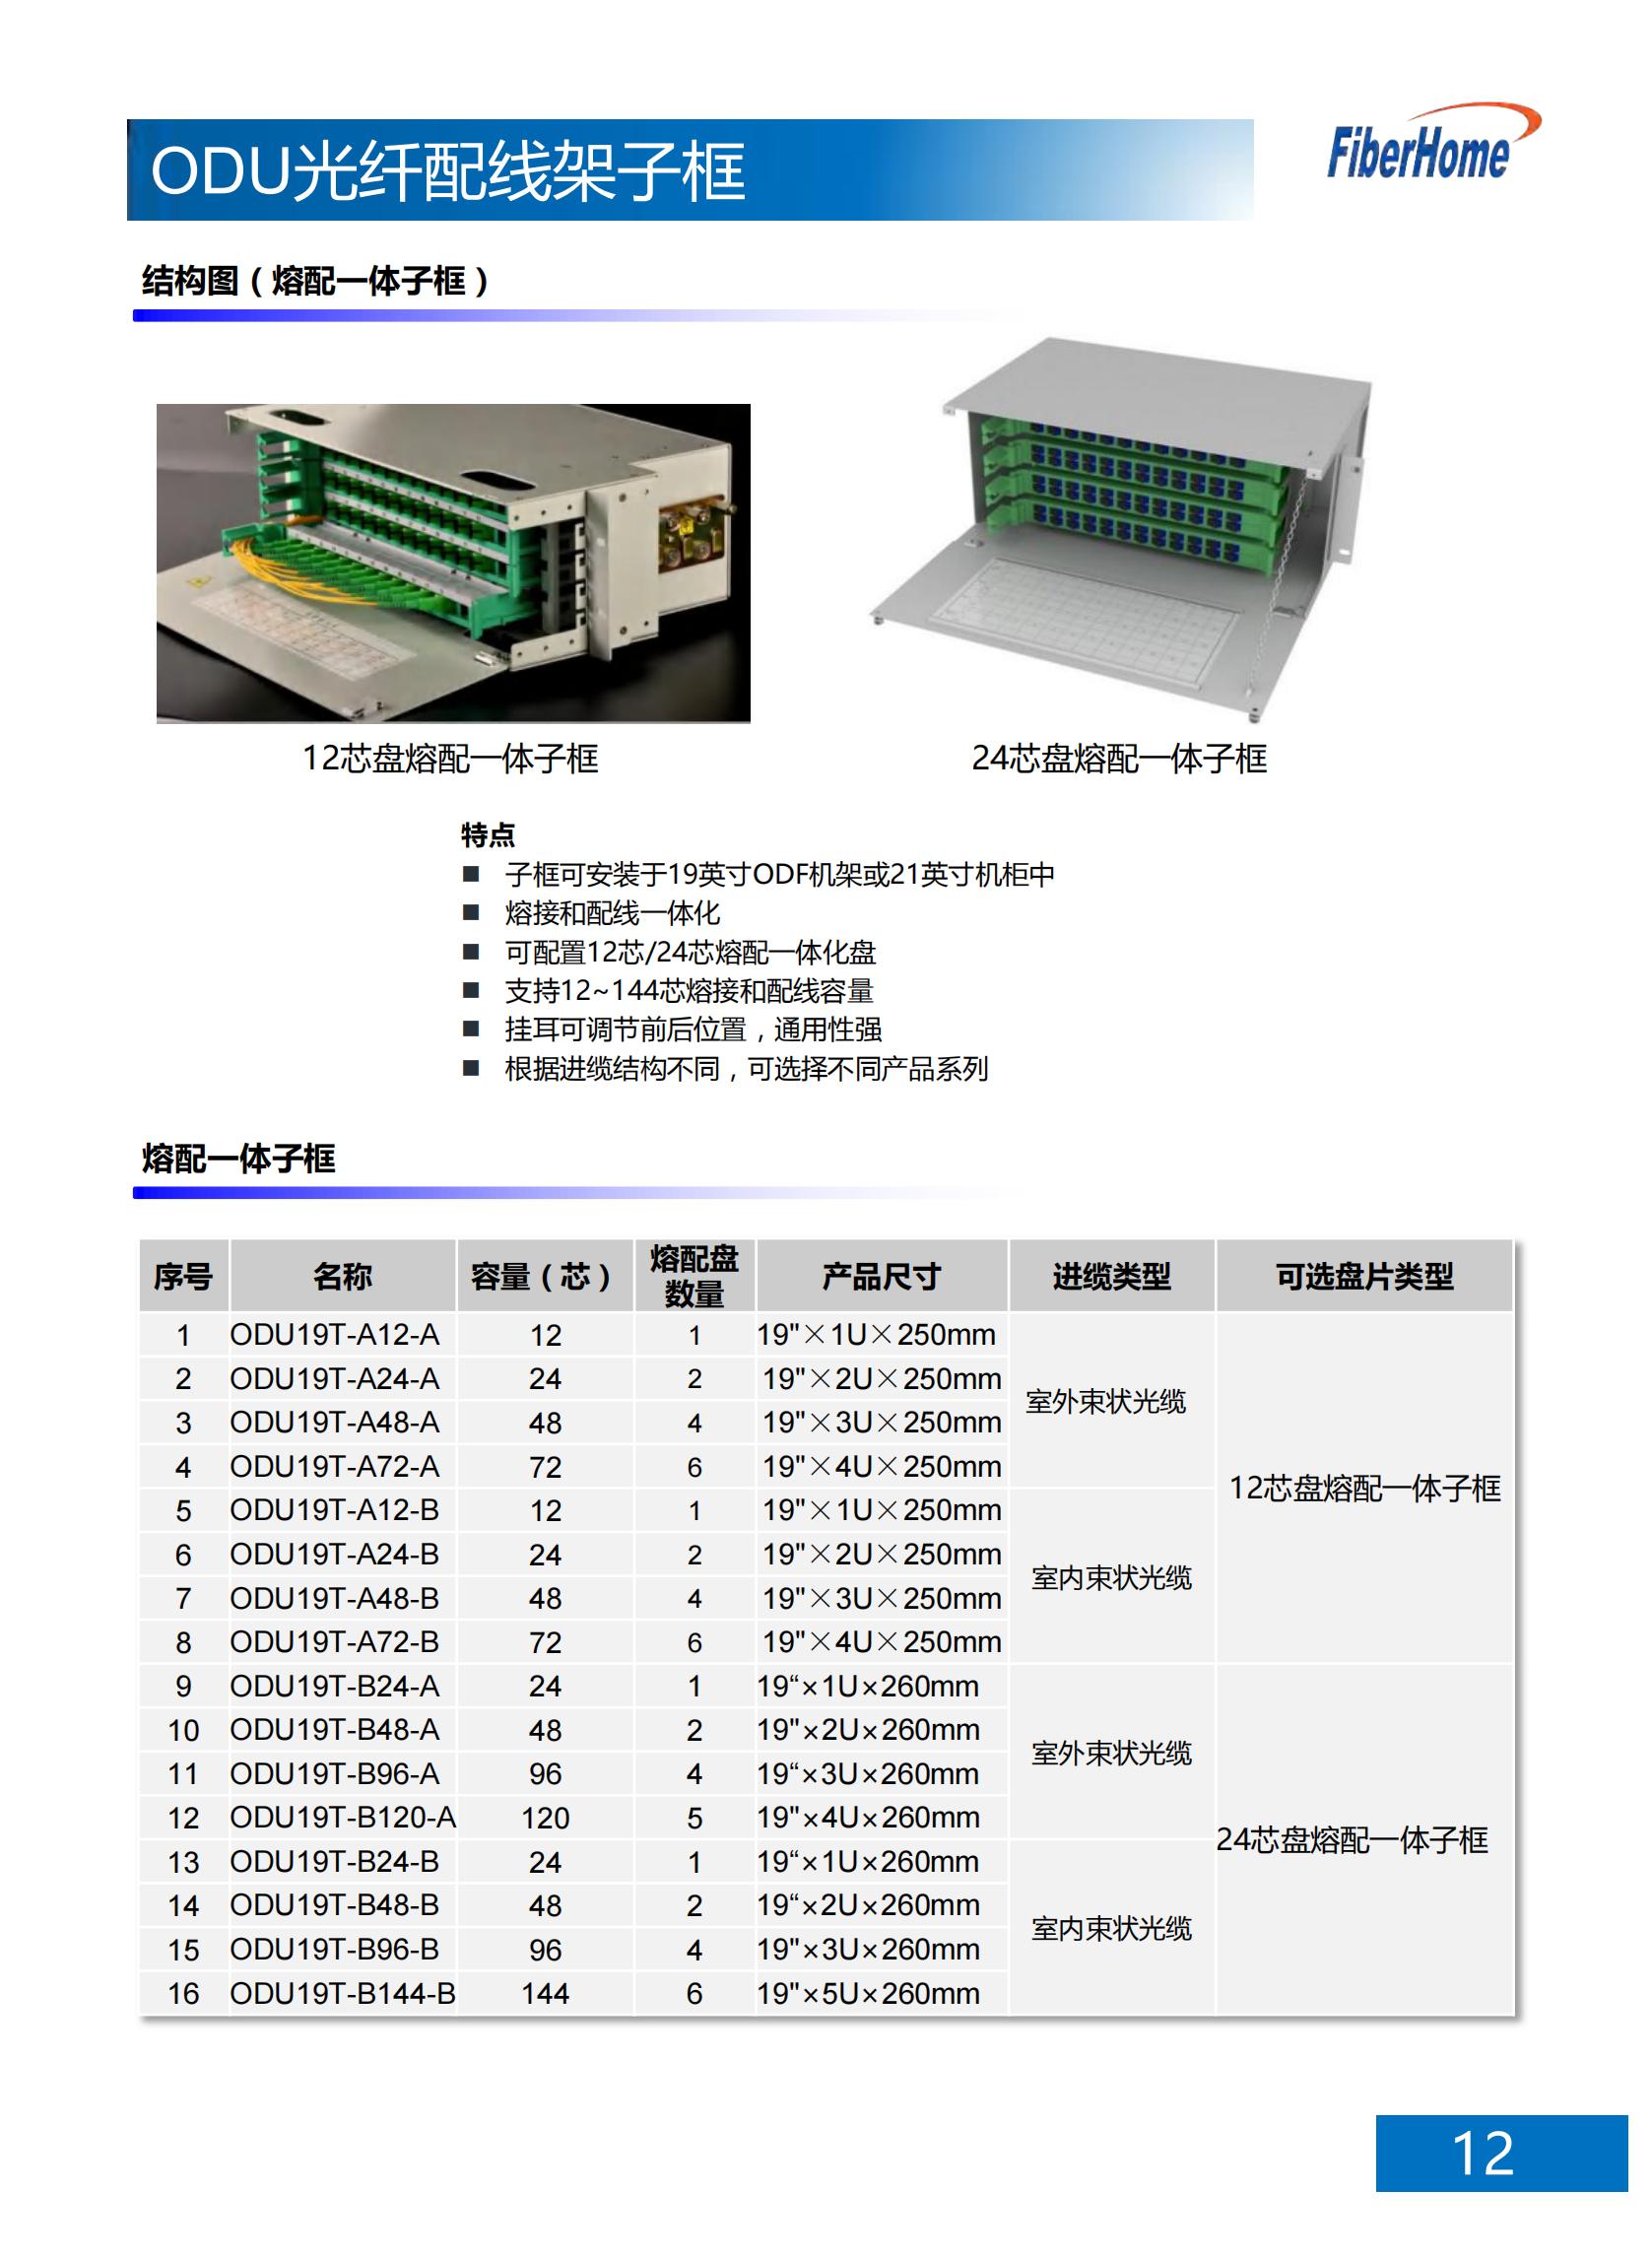 24-core ODU optical fiber distribution shelf frame ODU19T-A24-A-FC (including 12-core FC fusion integration unit*2)